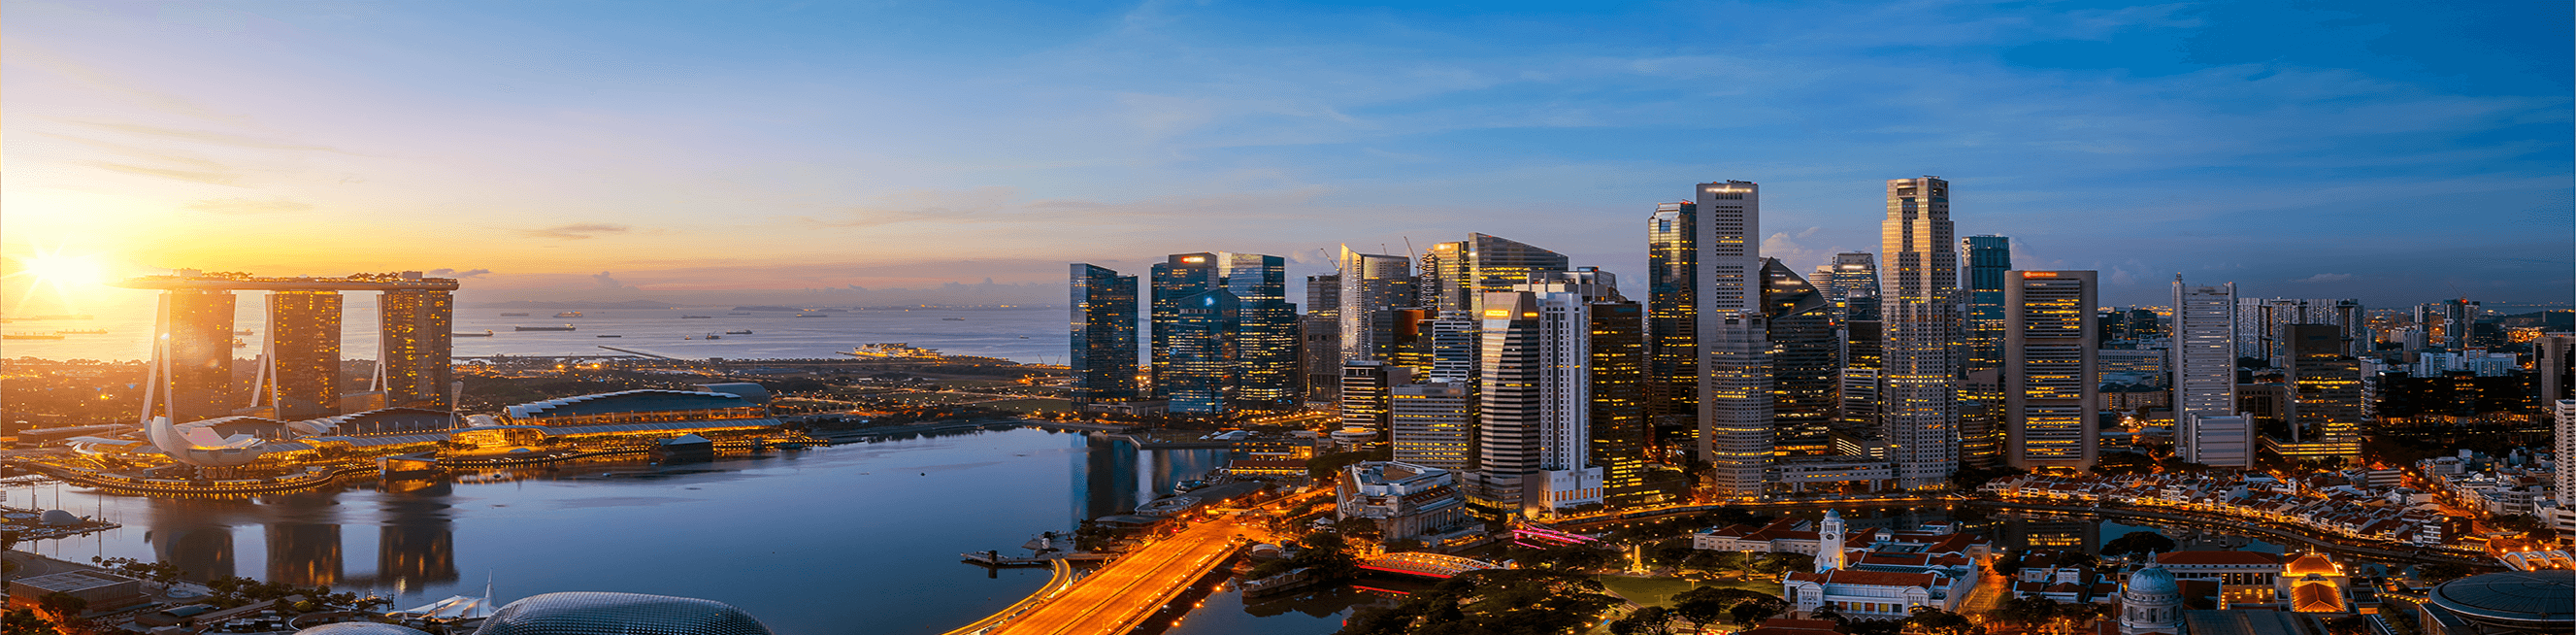 Singapore-hotels